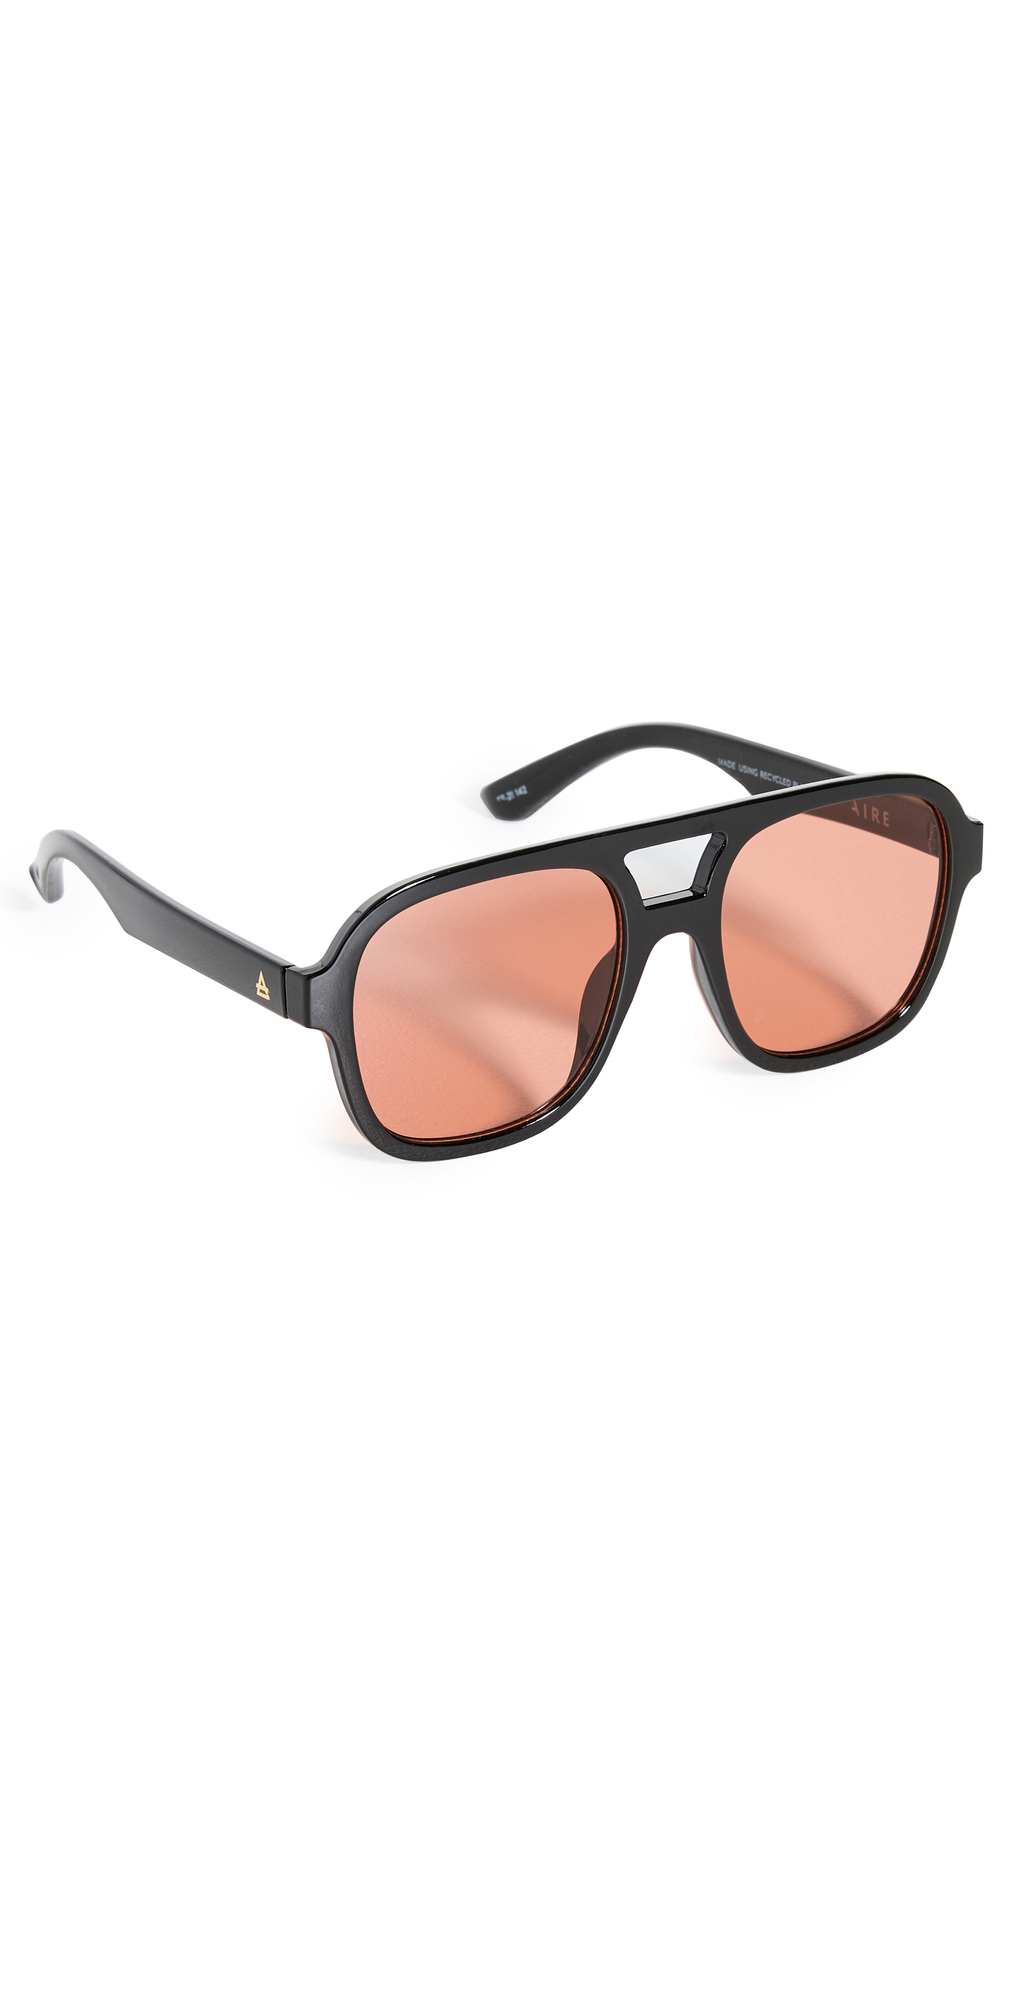 AIRE Whirlpool Sunglasses in black / tan